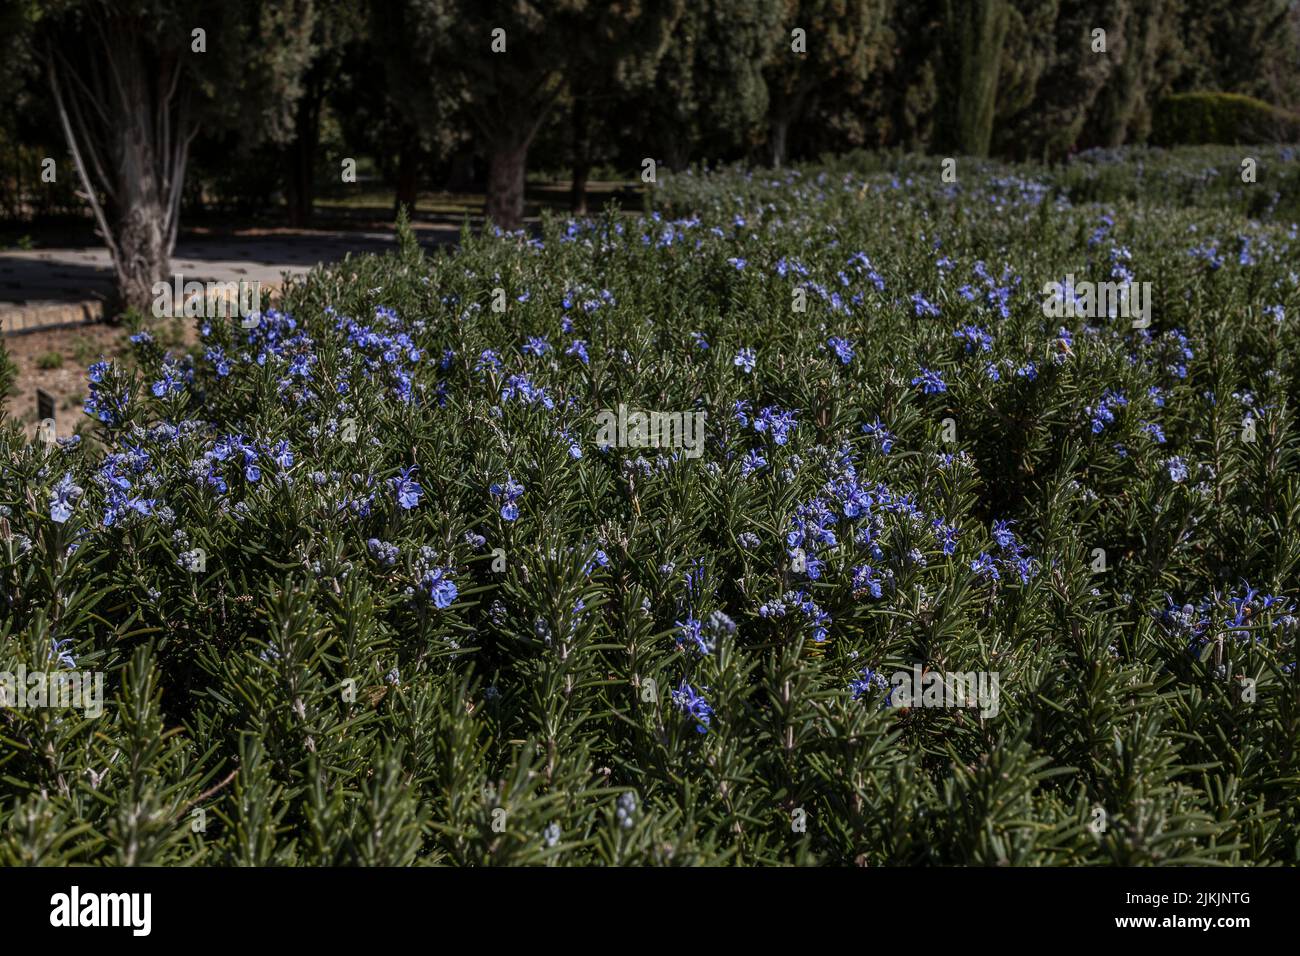 Flores de iran fotografías e imágenes de alta resolución - Alamy